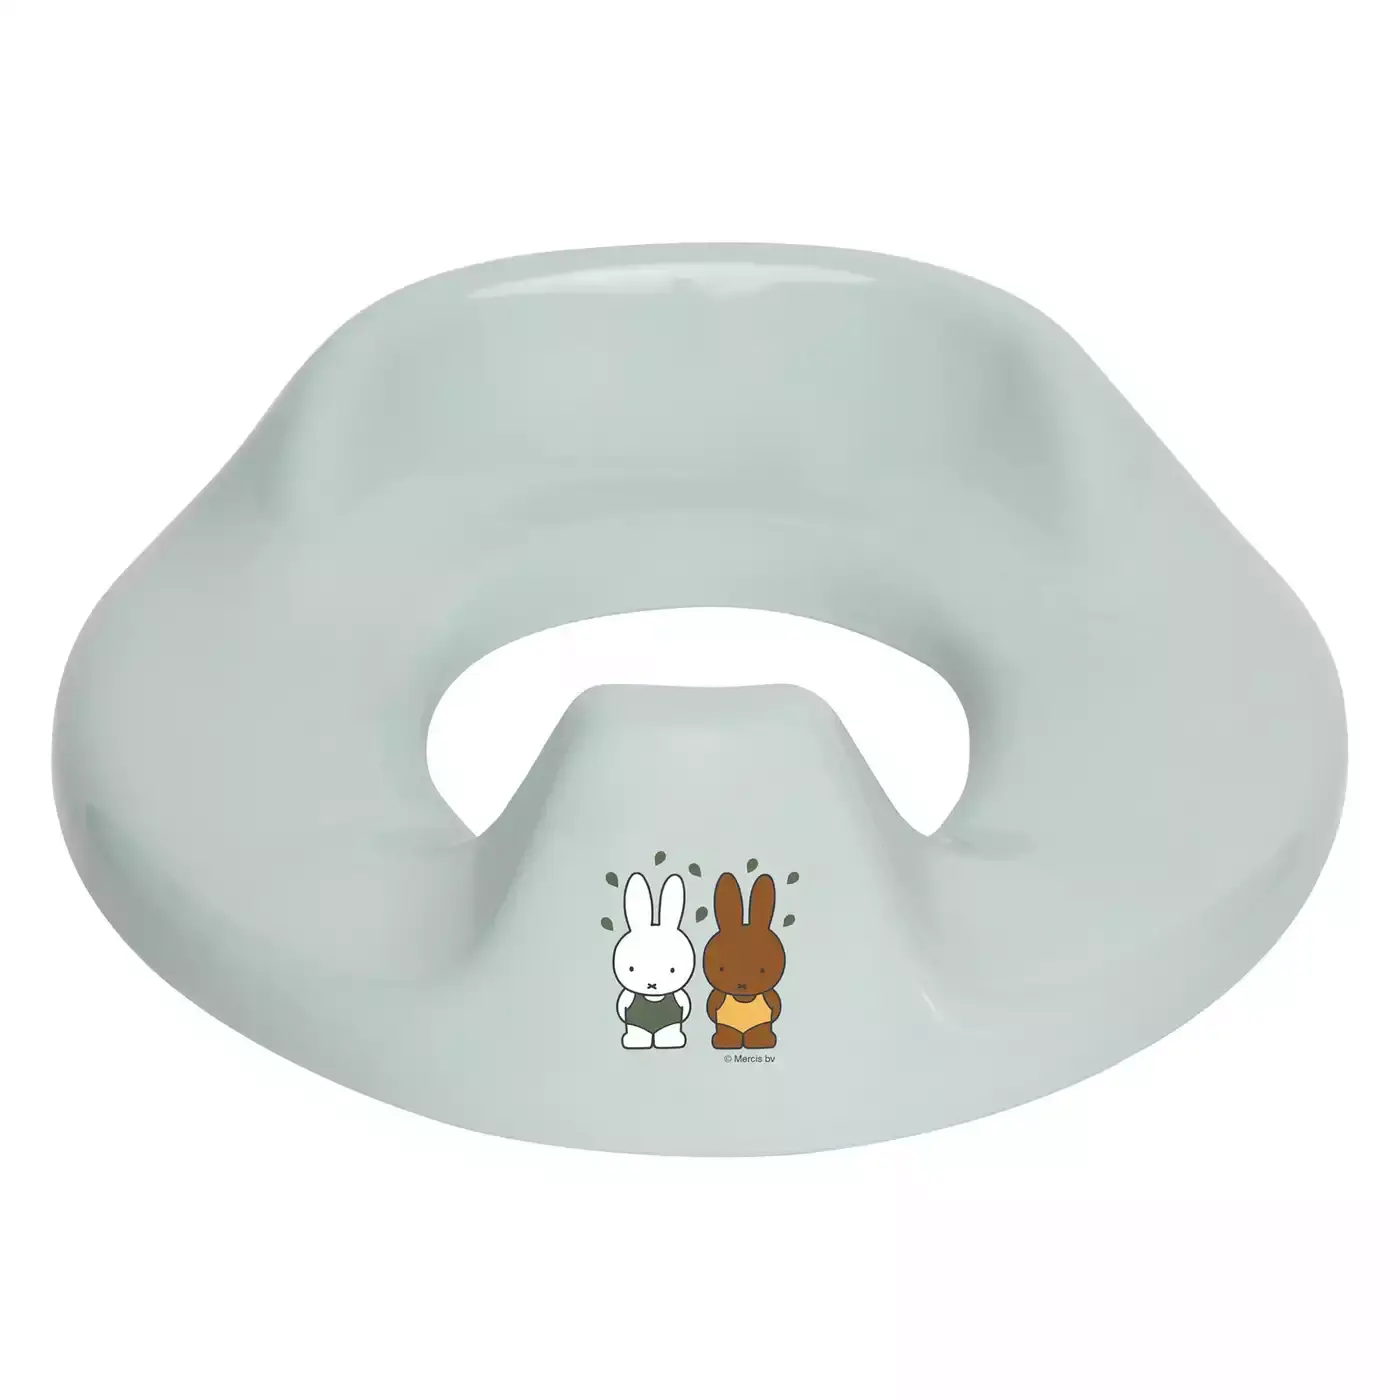 Toilettensitz Miffy & Melanie bébé-jou Grau 2000582438206 1